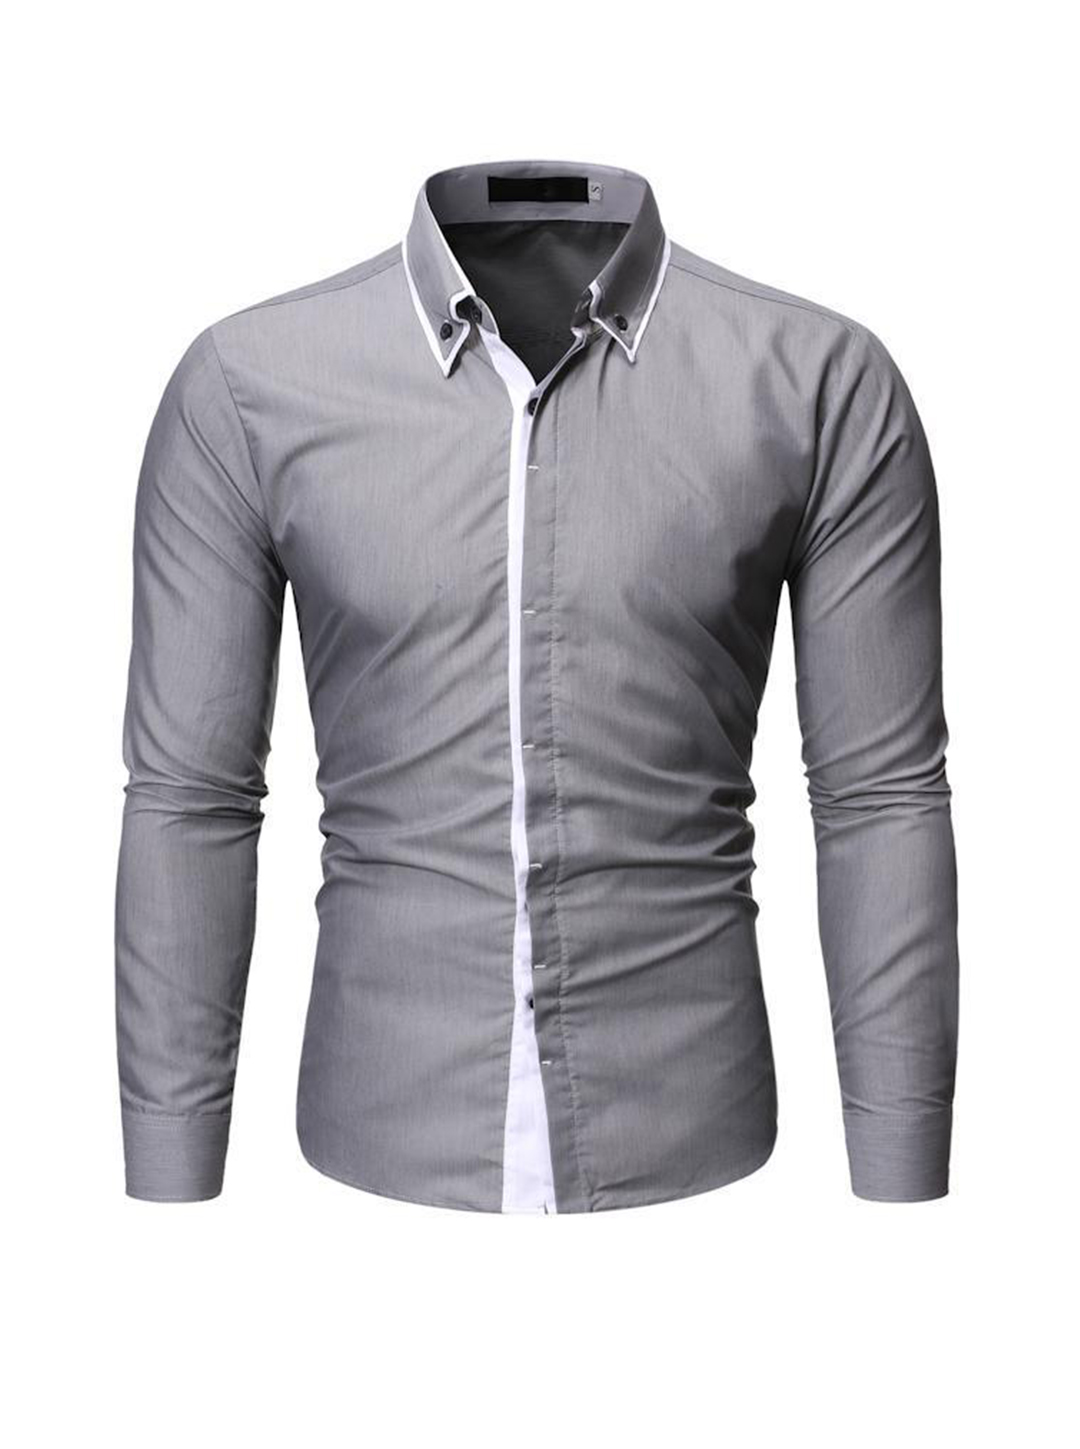 Men's Contrasting Colors Casual Shirt-poisonstreetwear.com